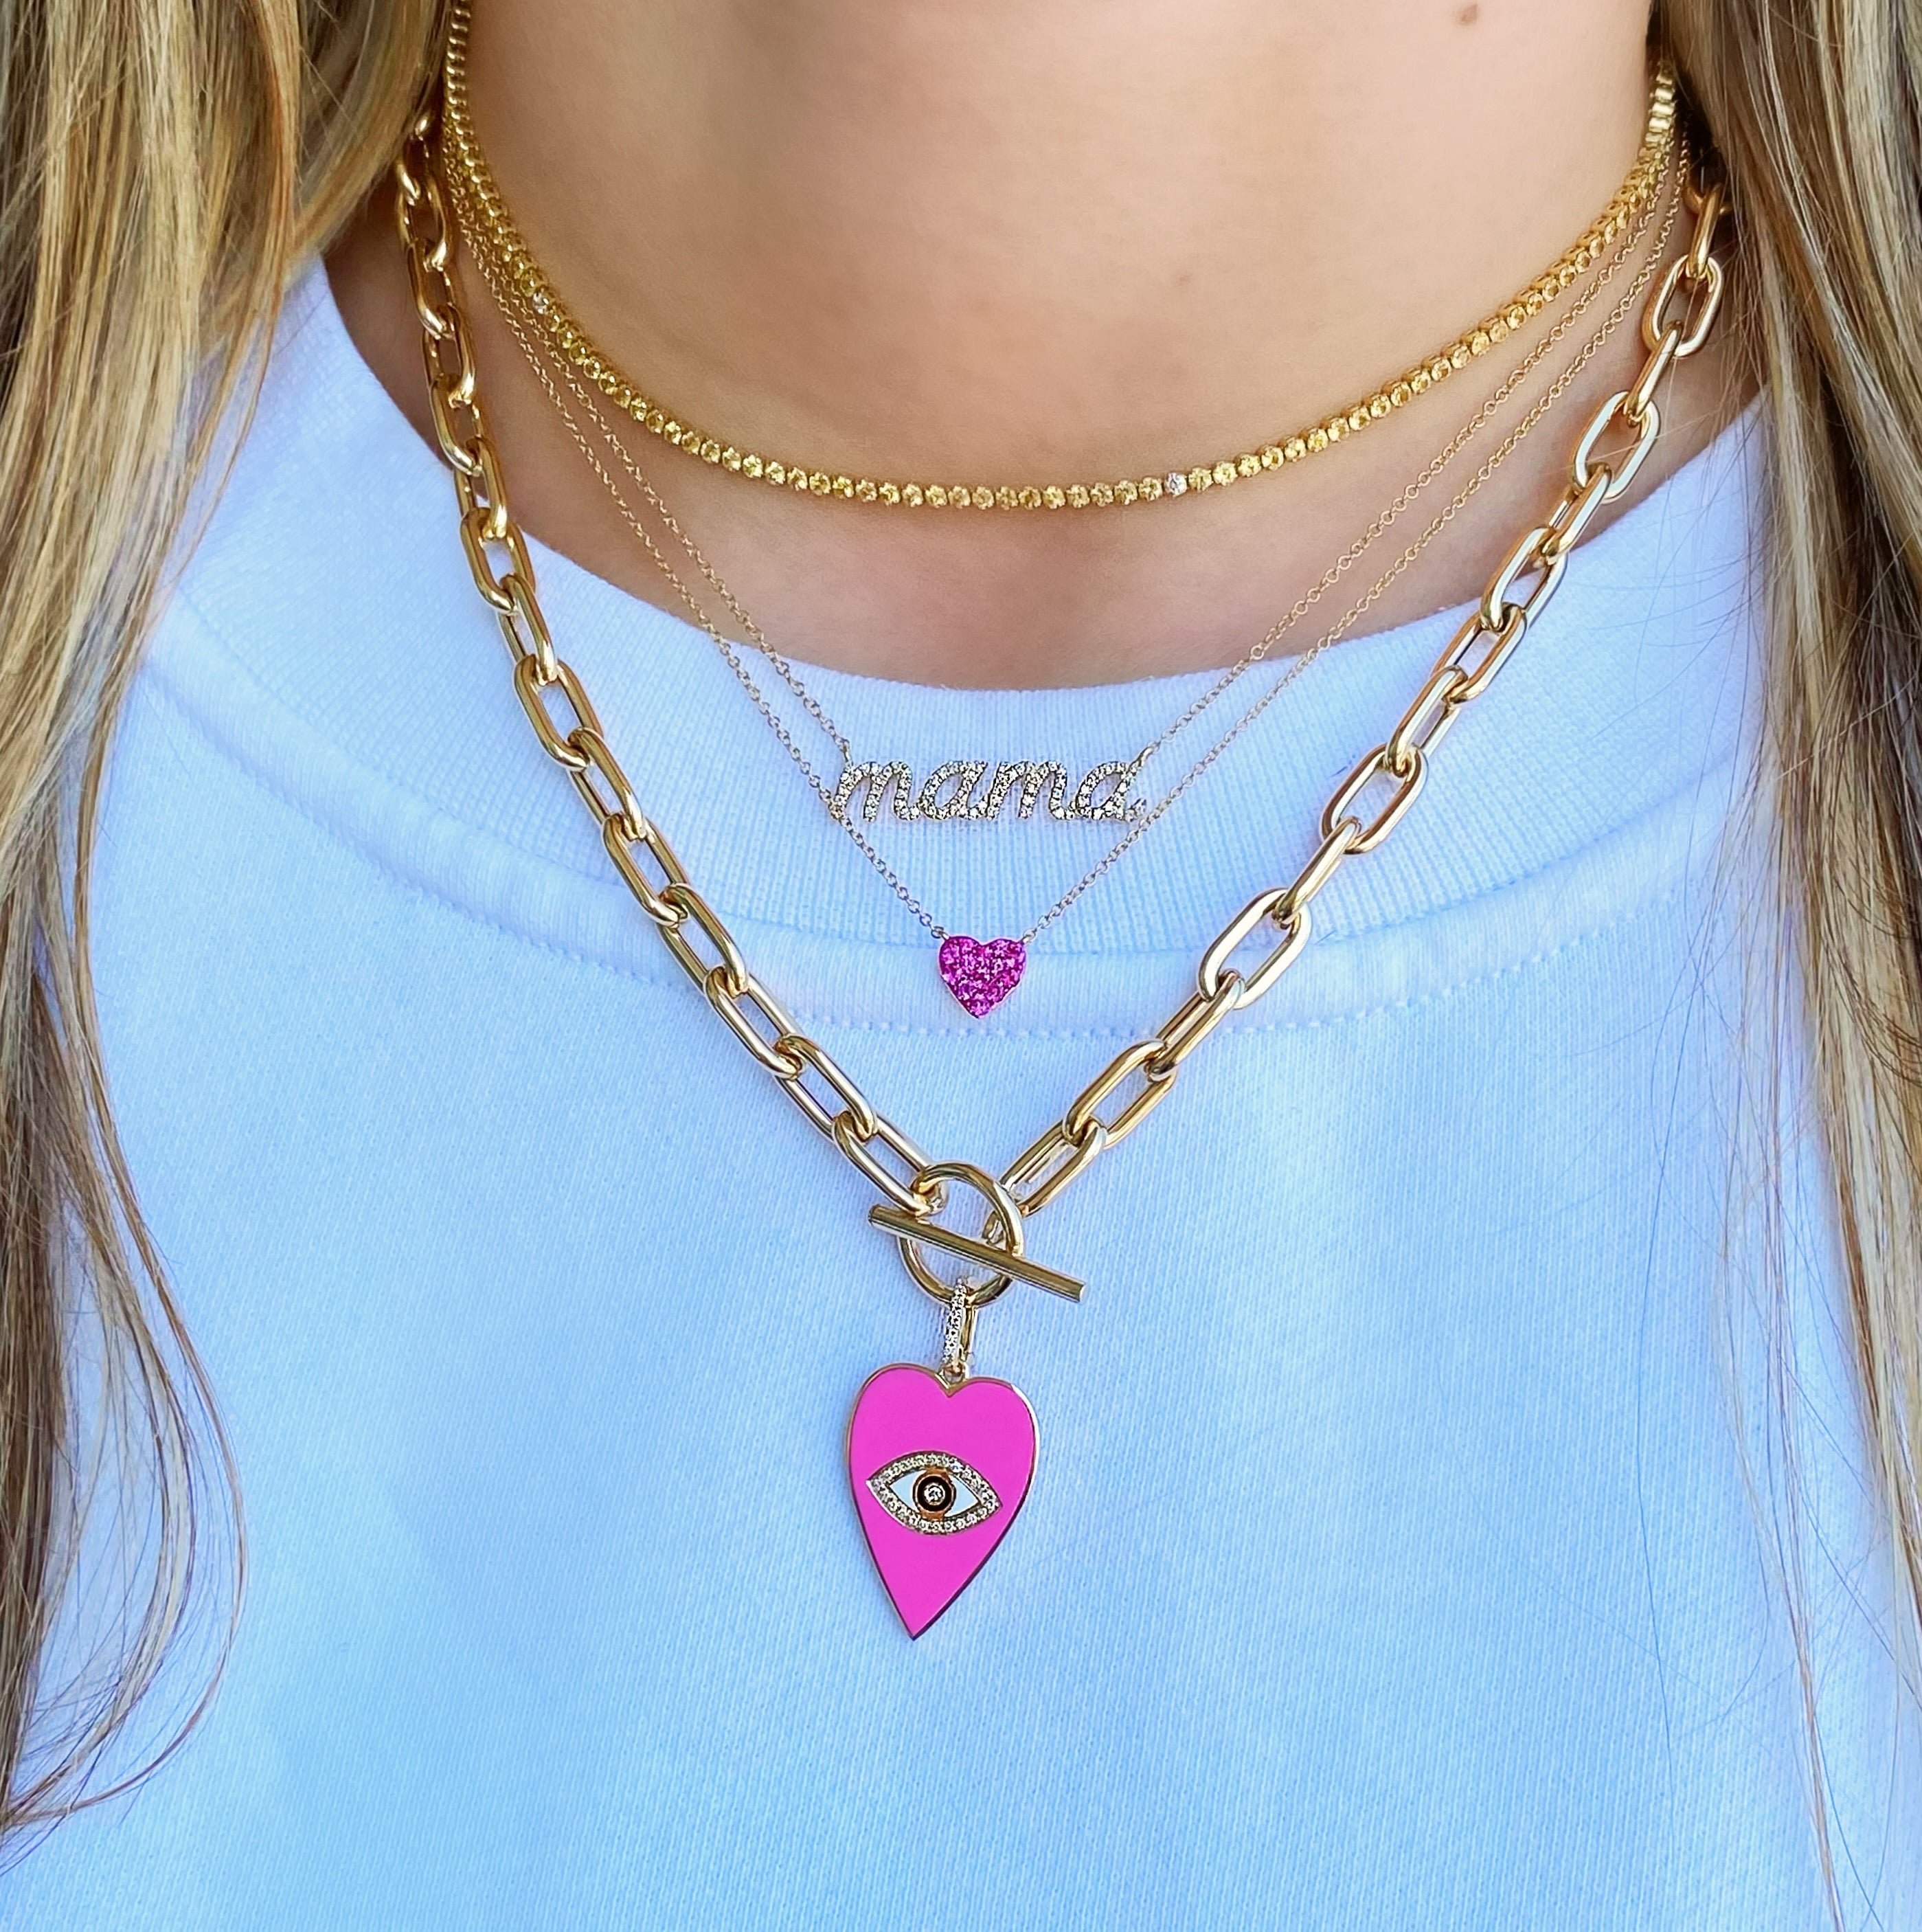 14K Gold Micro Pave Ruby Heart Necklace - Necklaces - Izakov Diamonds + Fine Jewelry